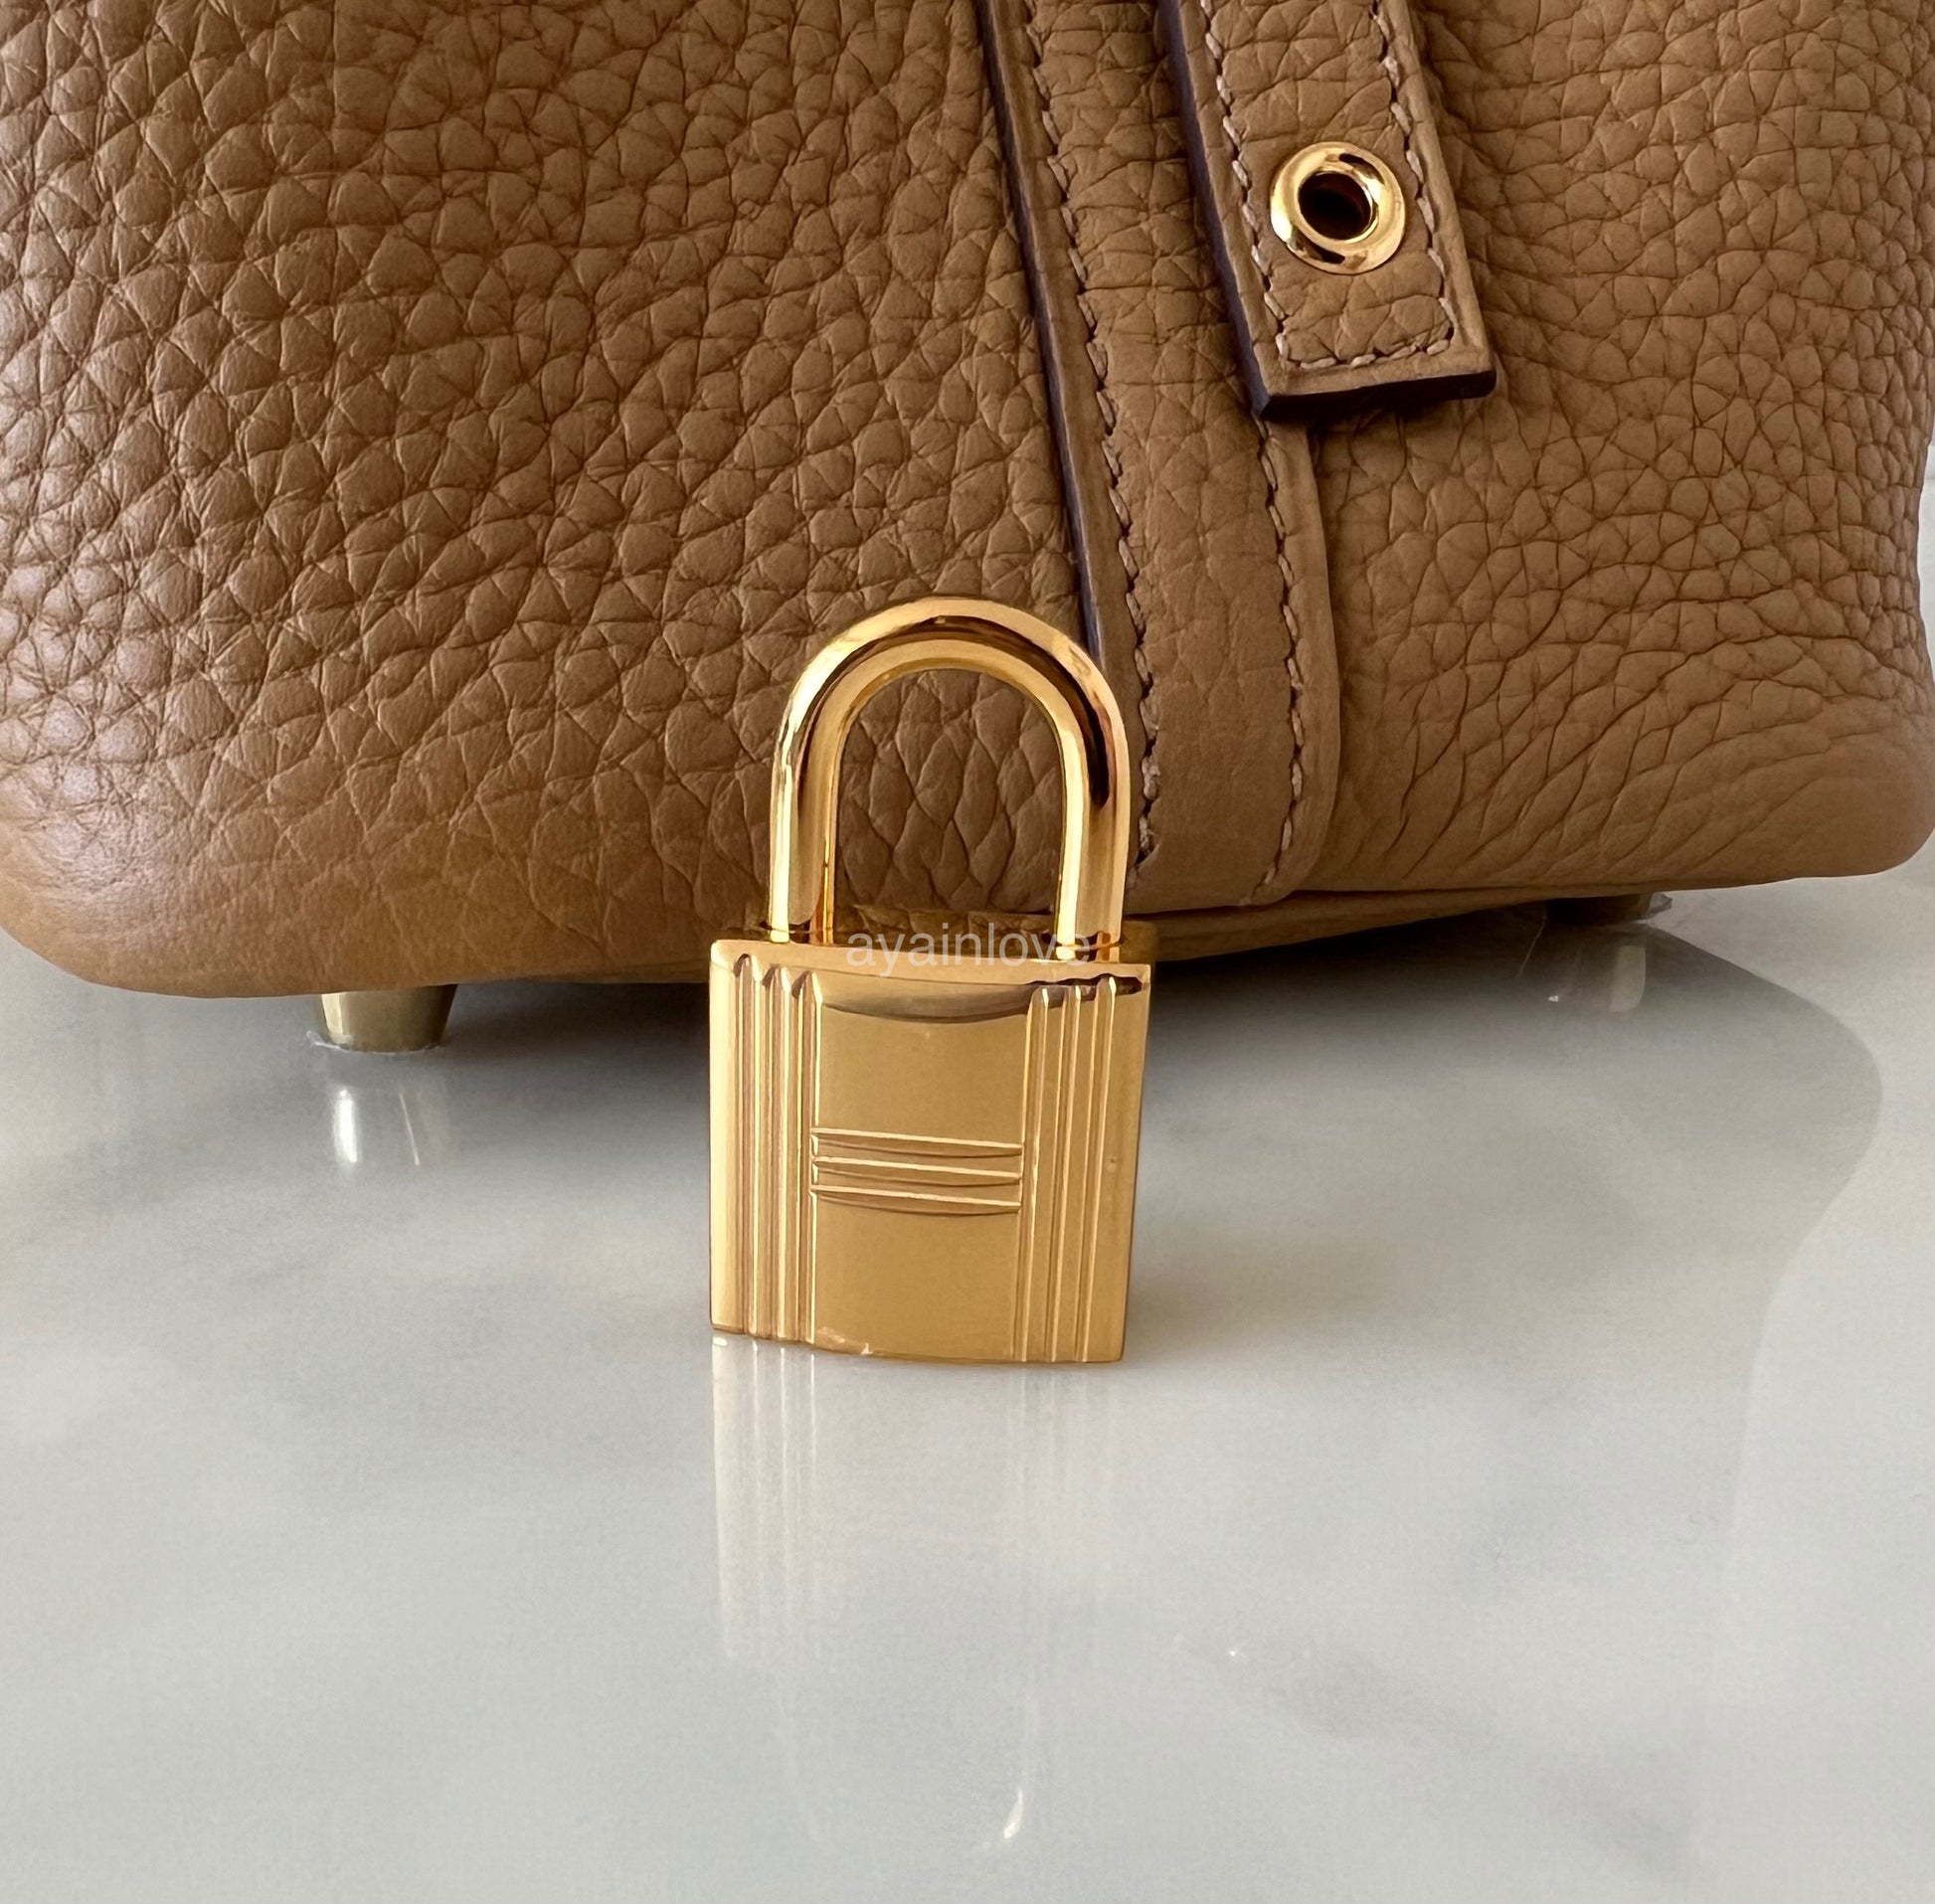 Hermes Gold Brown Nata Picotin Lock 18 PM Hardware Handbag Bag